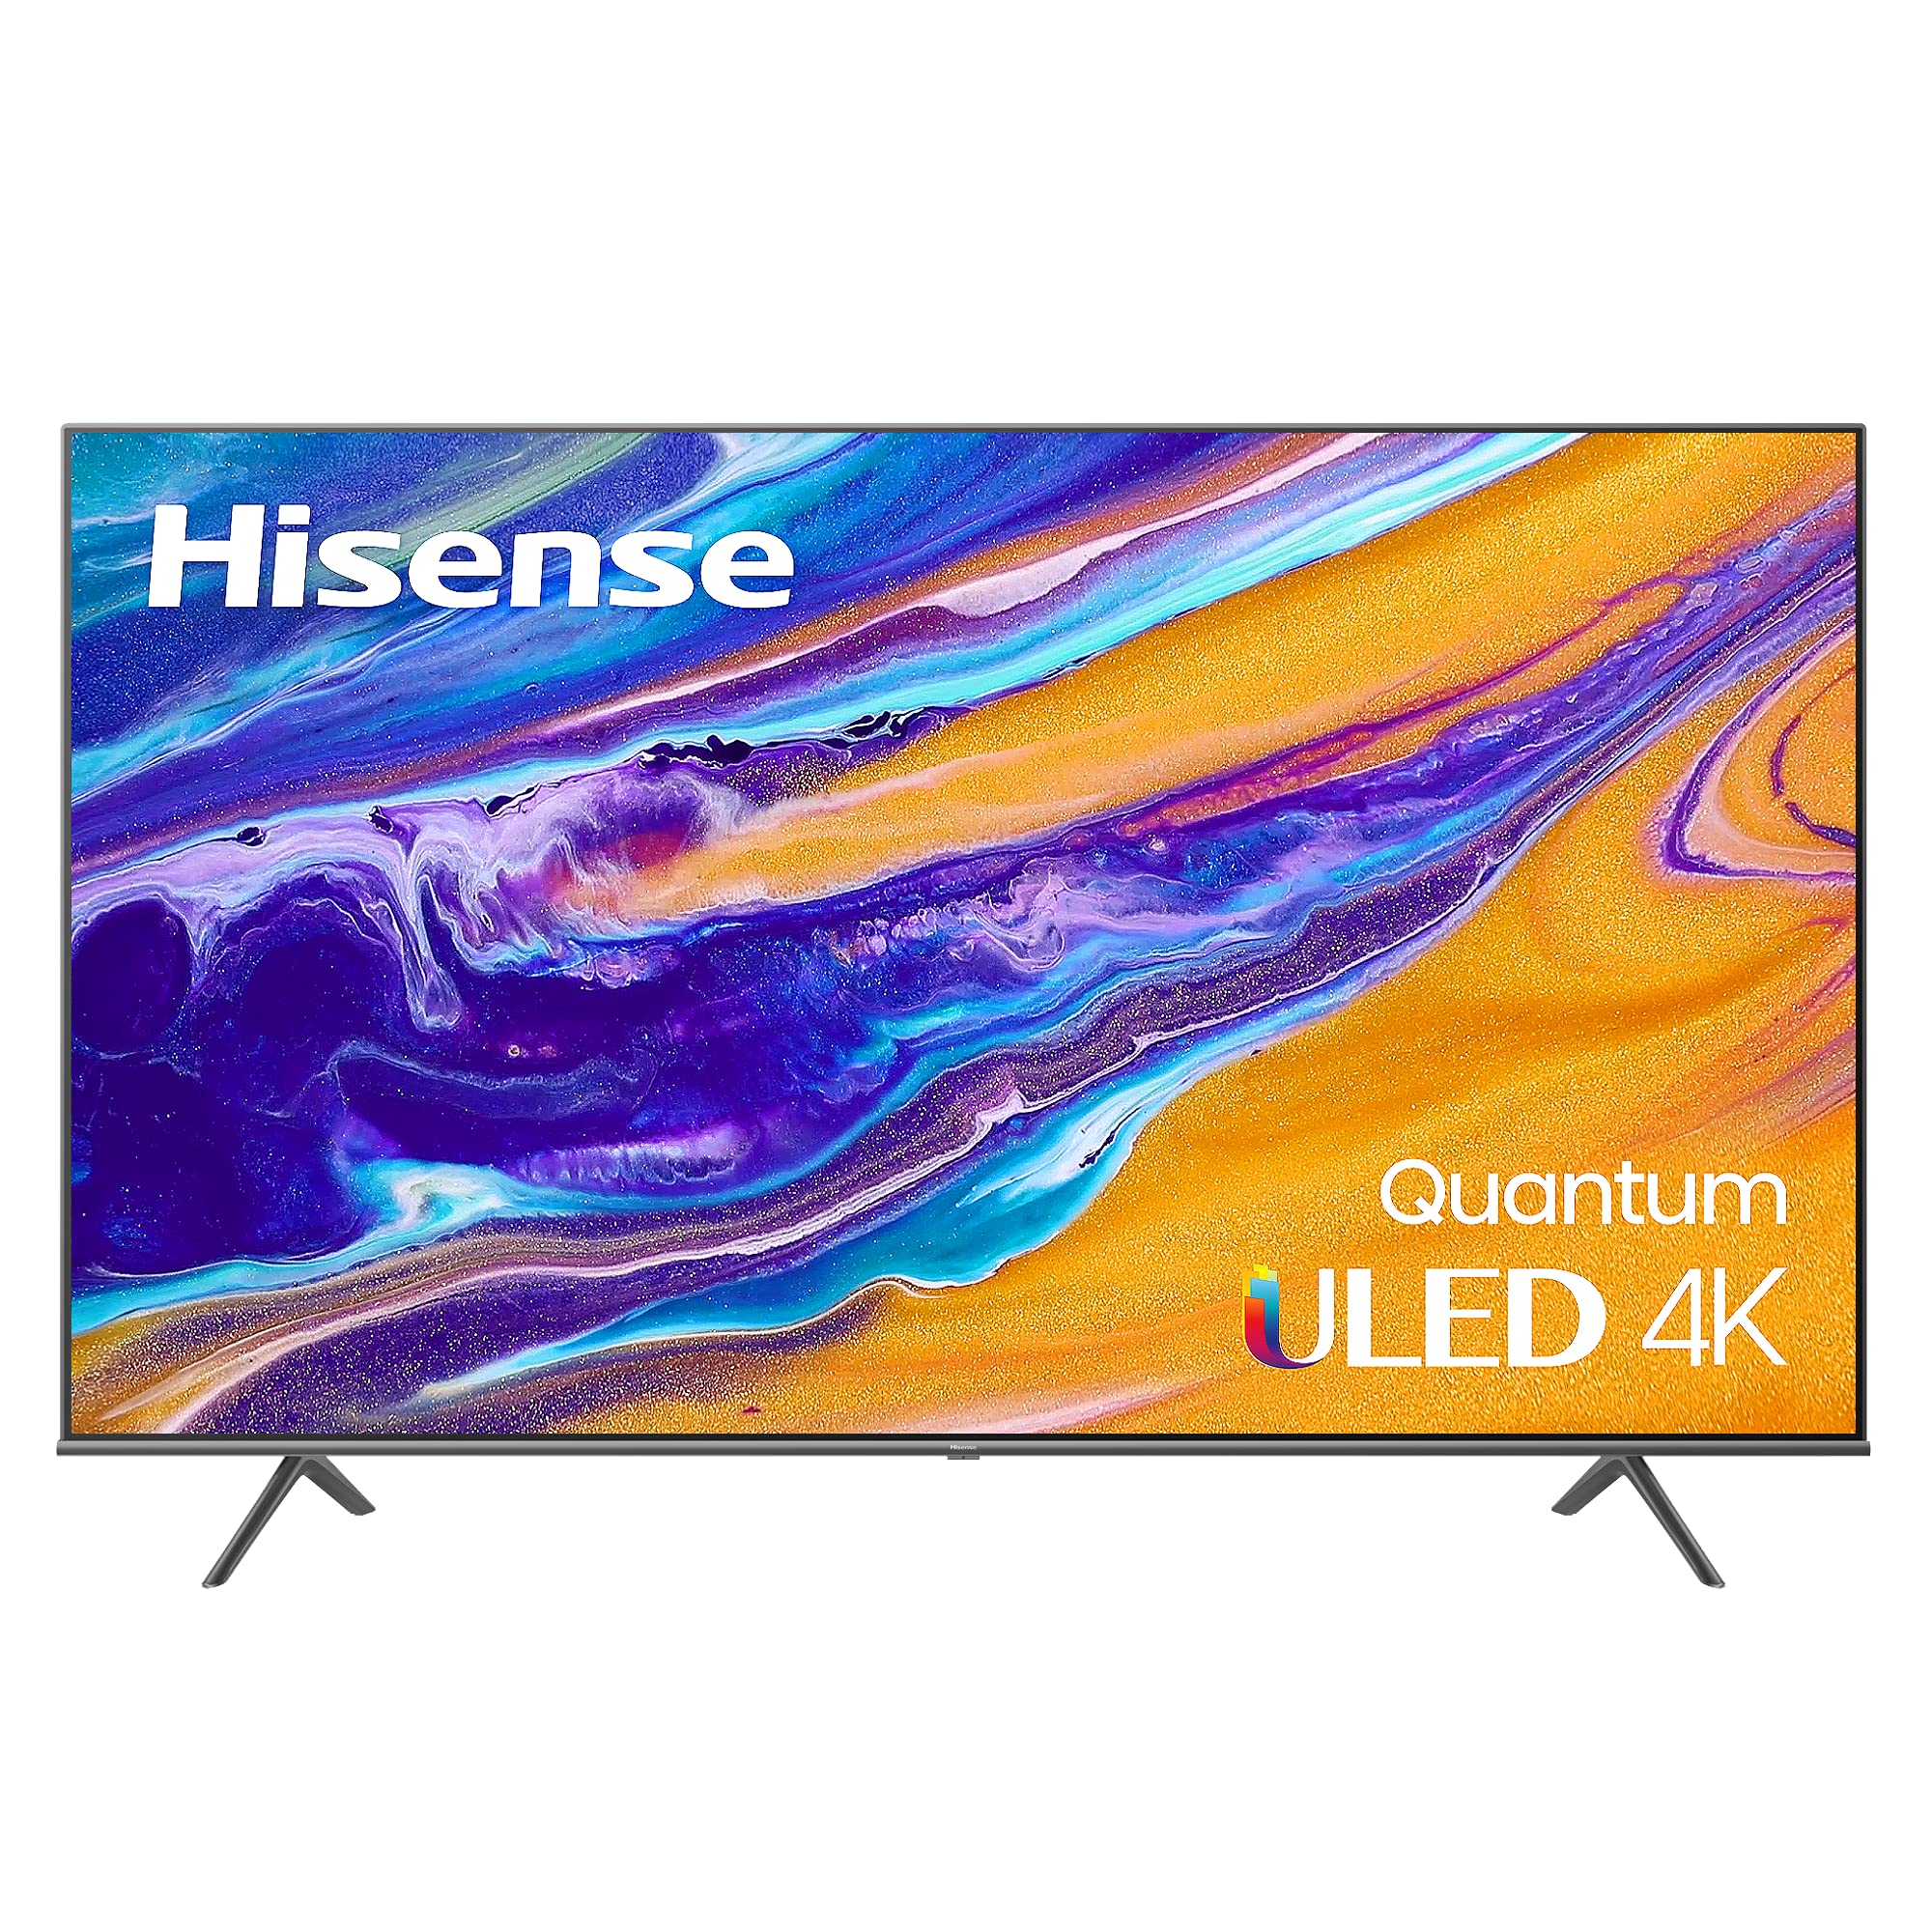 Hisense - 75" Class U6G Series Quantum ULED 4K UHD Smart Android TV Model:75U6G. -. $899.99 at Best Buy